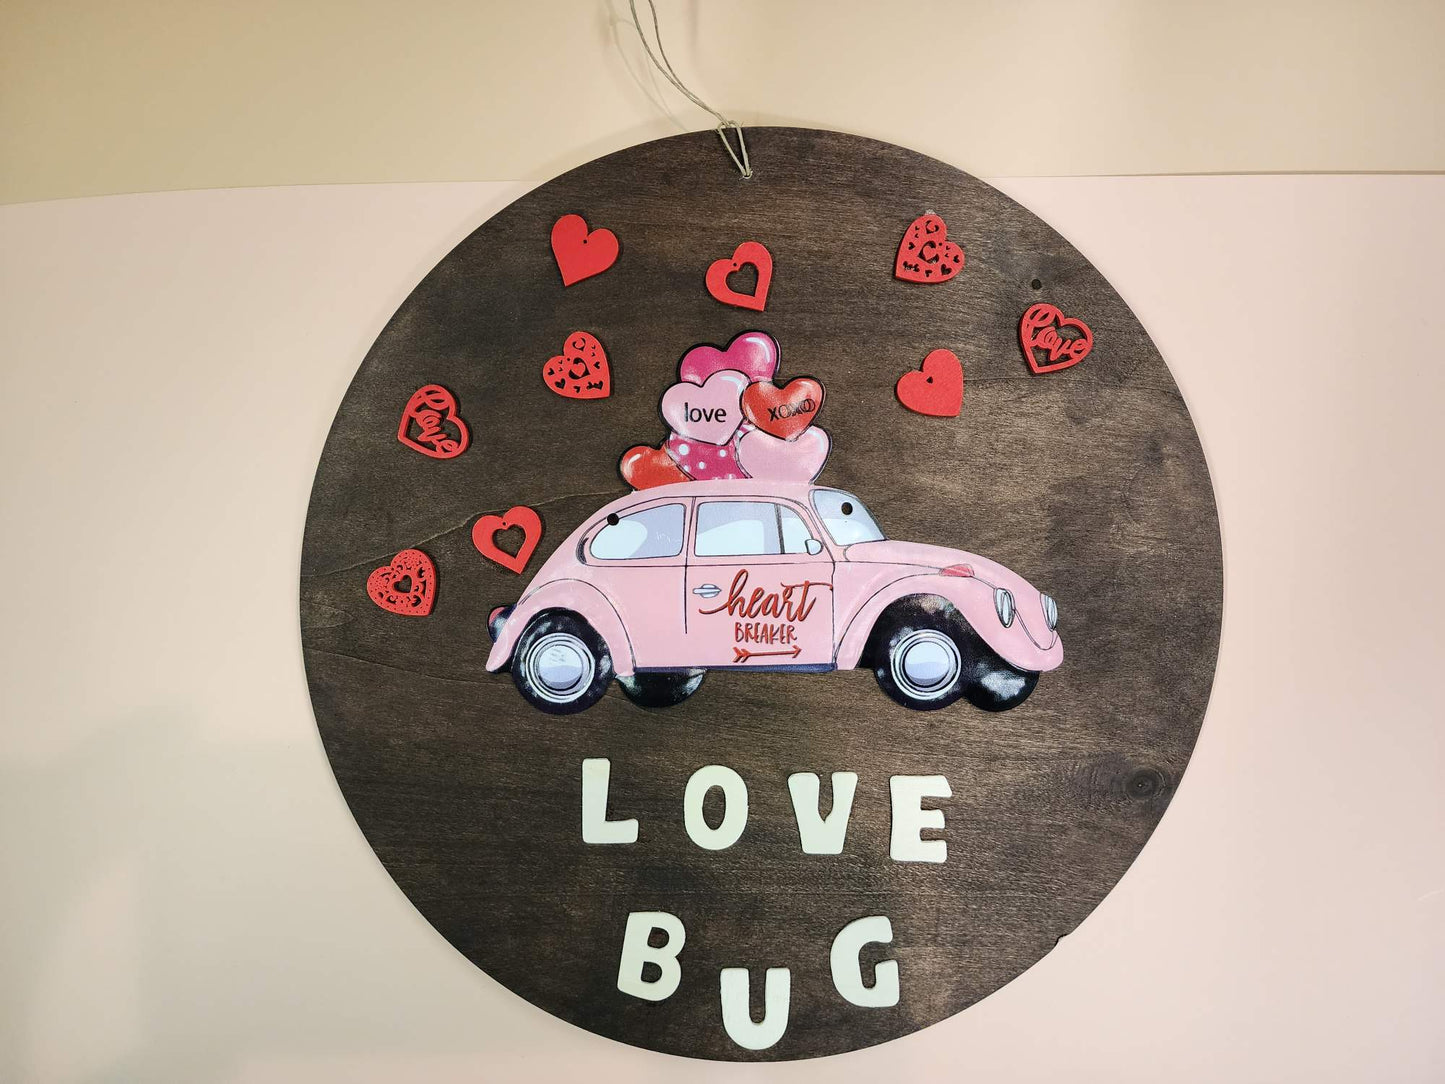 Love bug sign